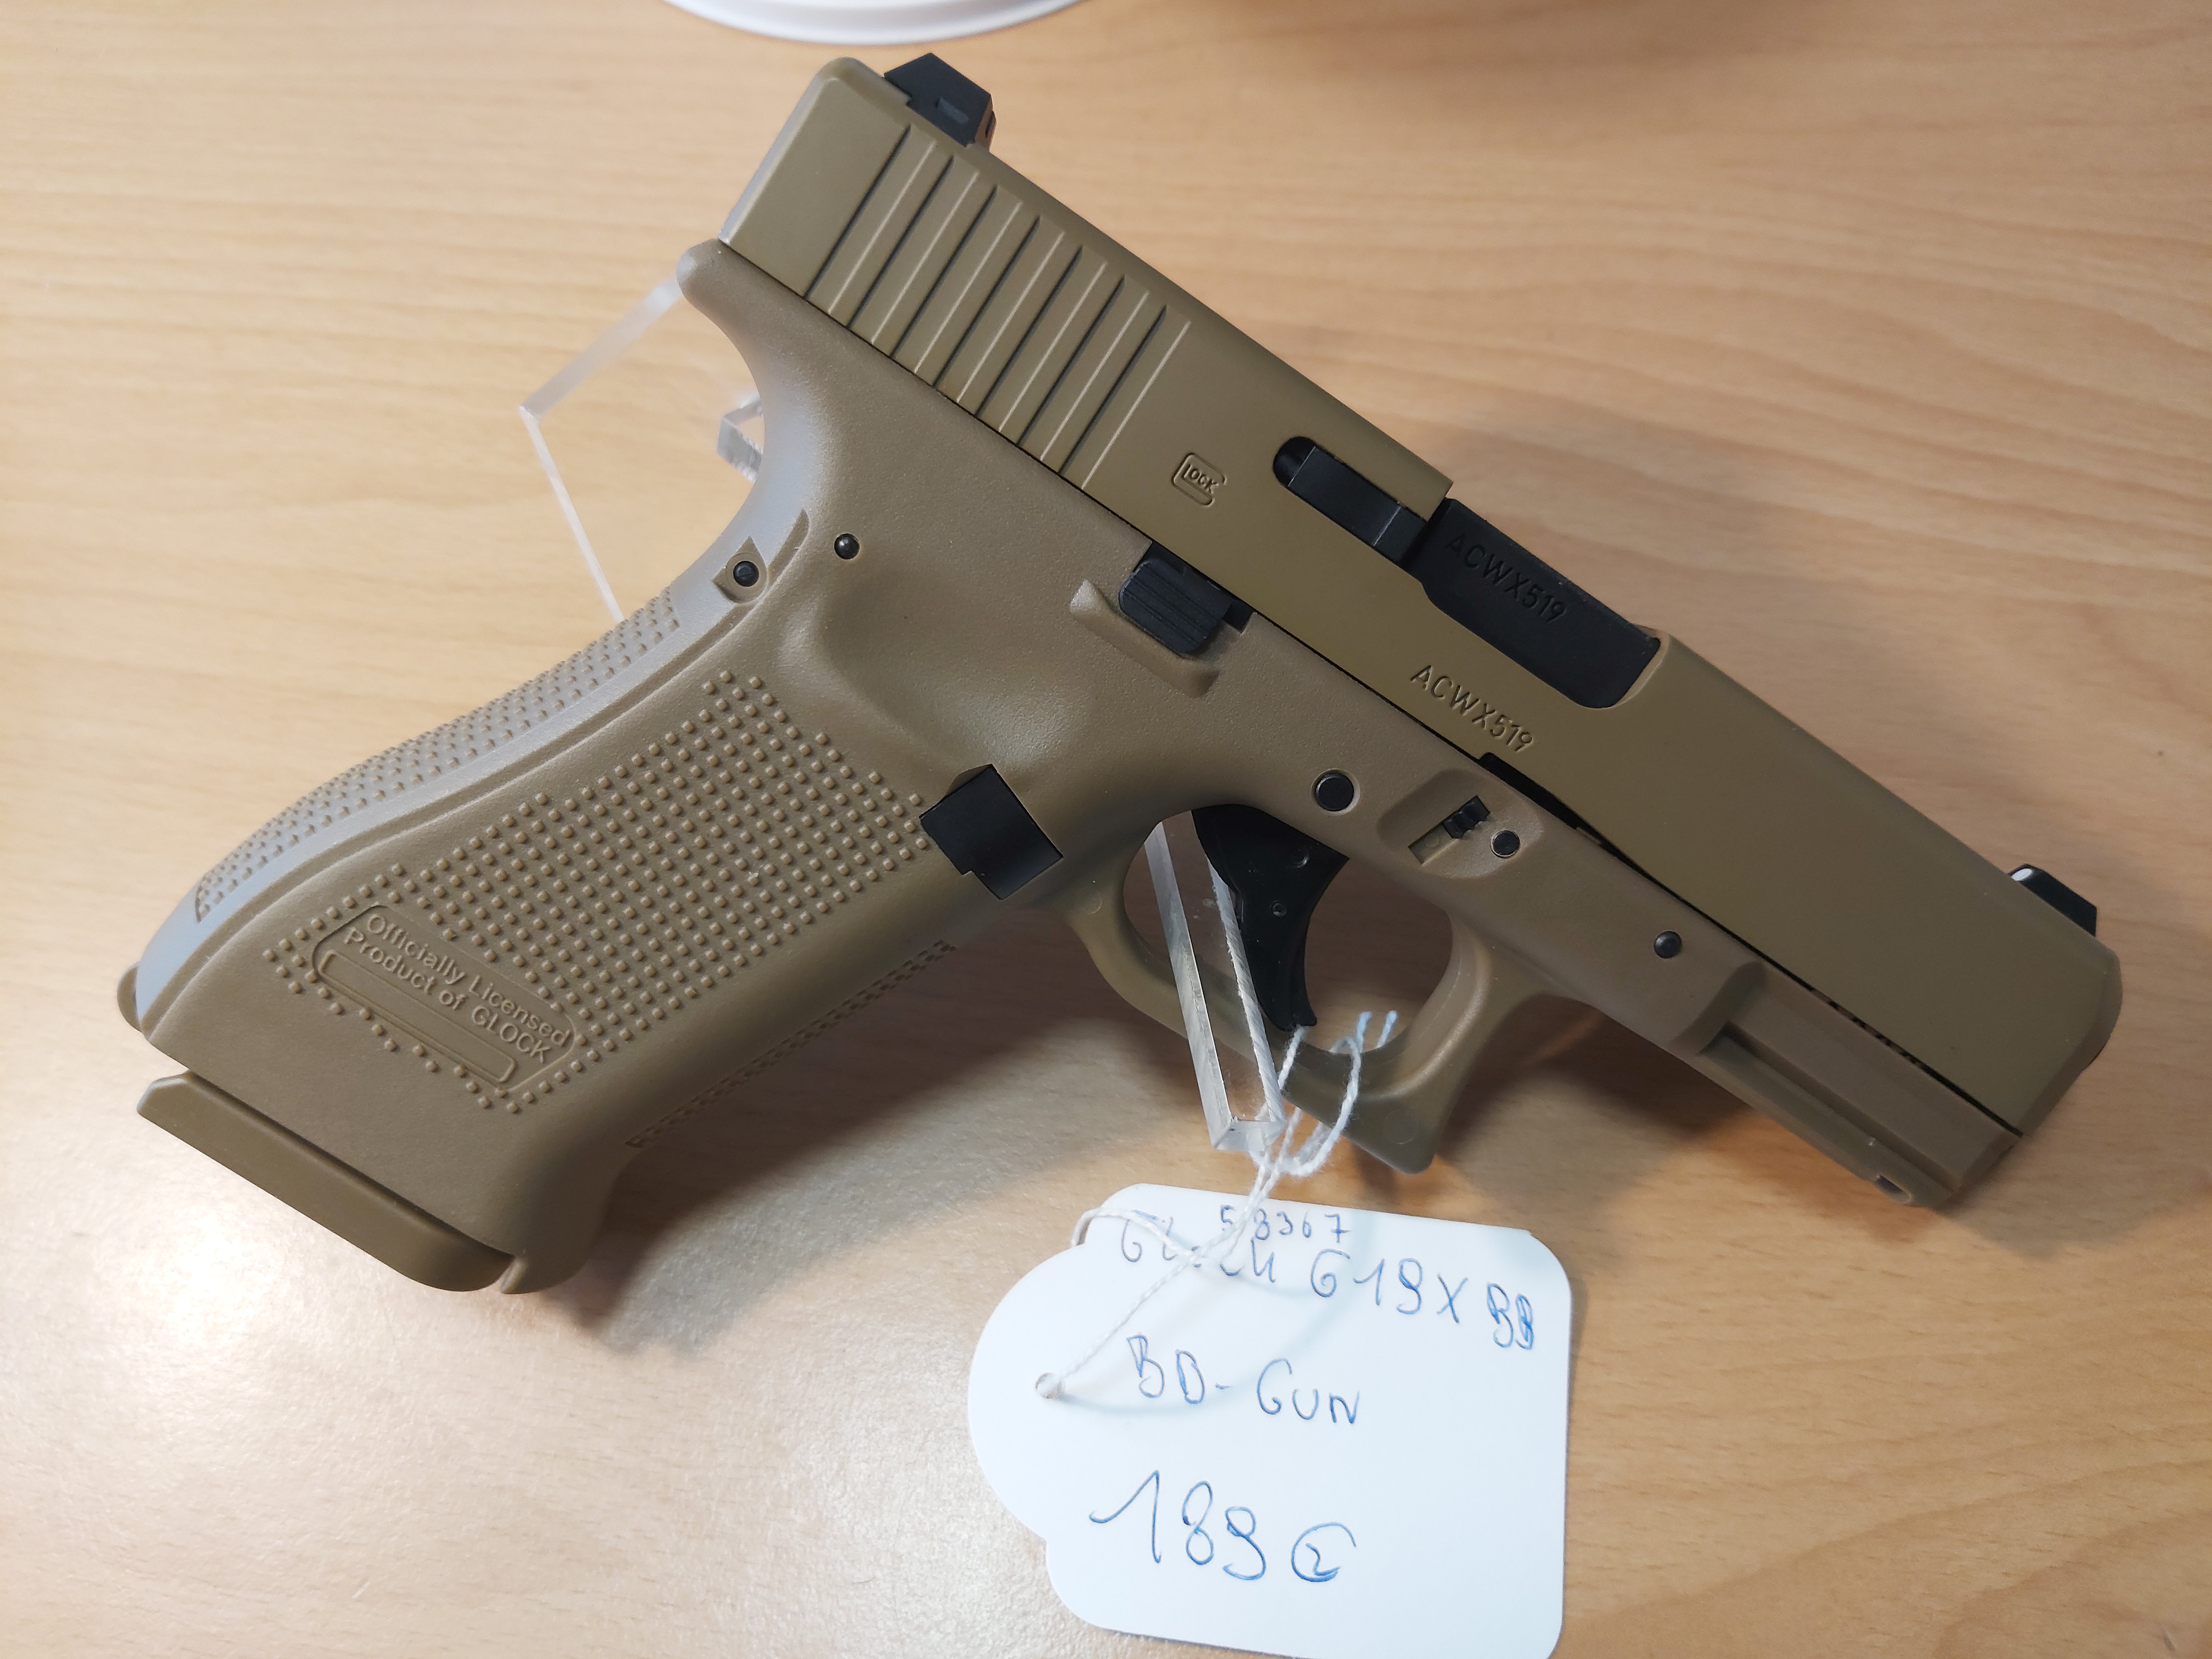 Glock 19X, BB-gun, blow-back, 189€